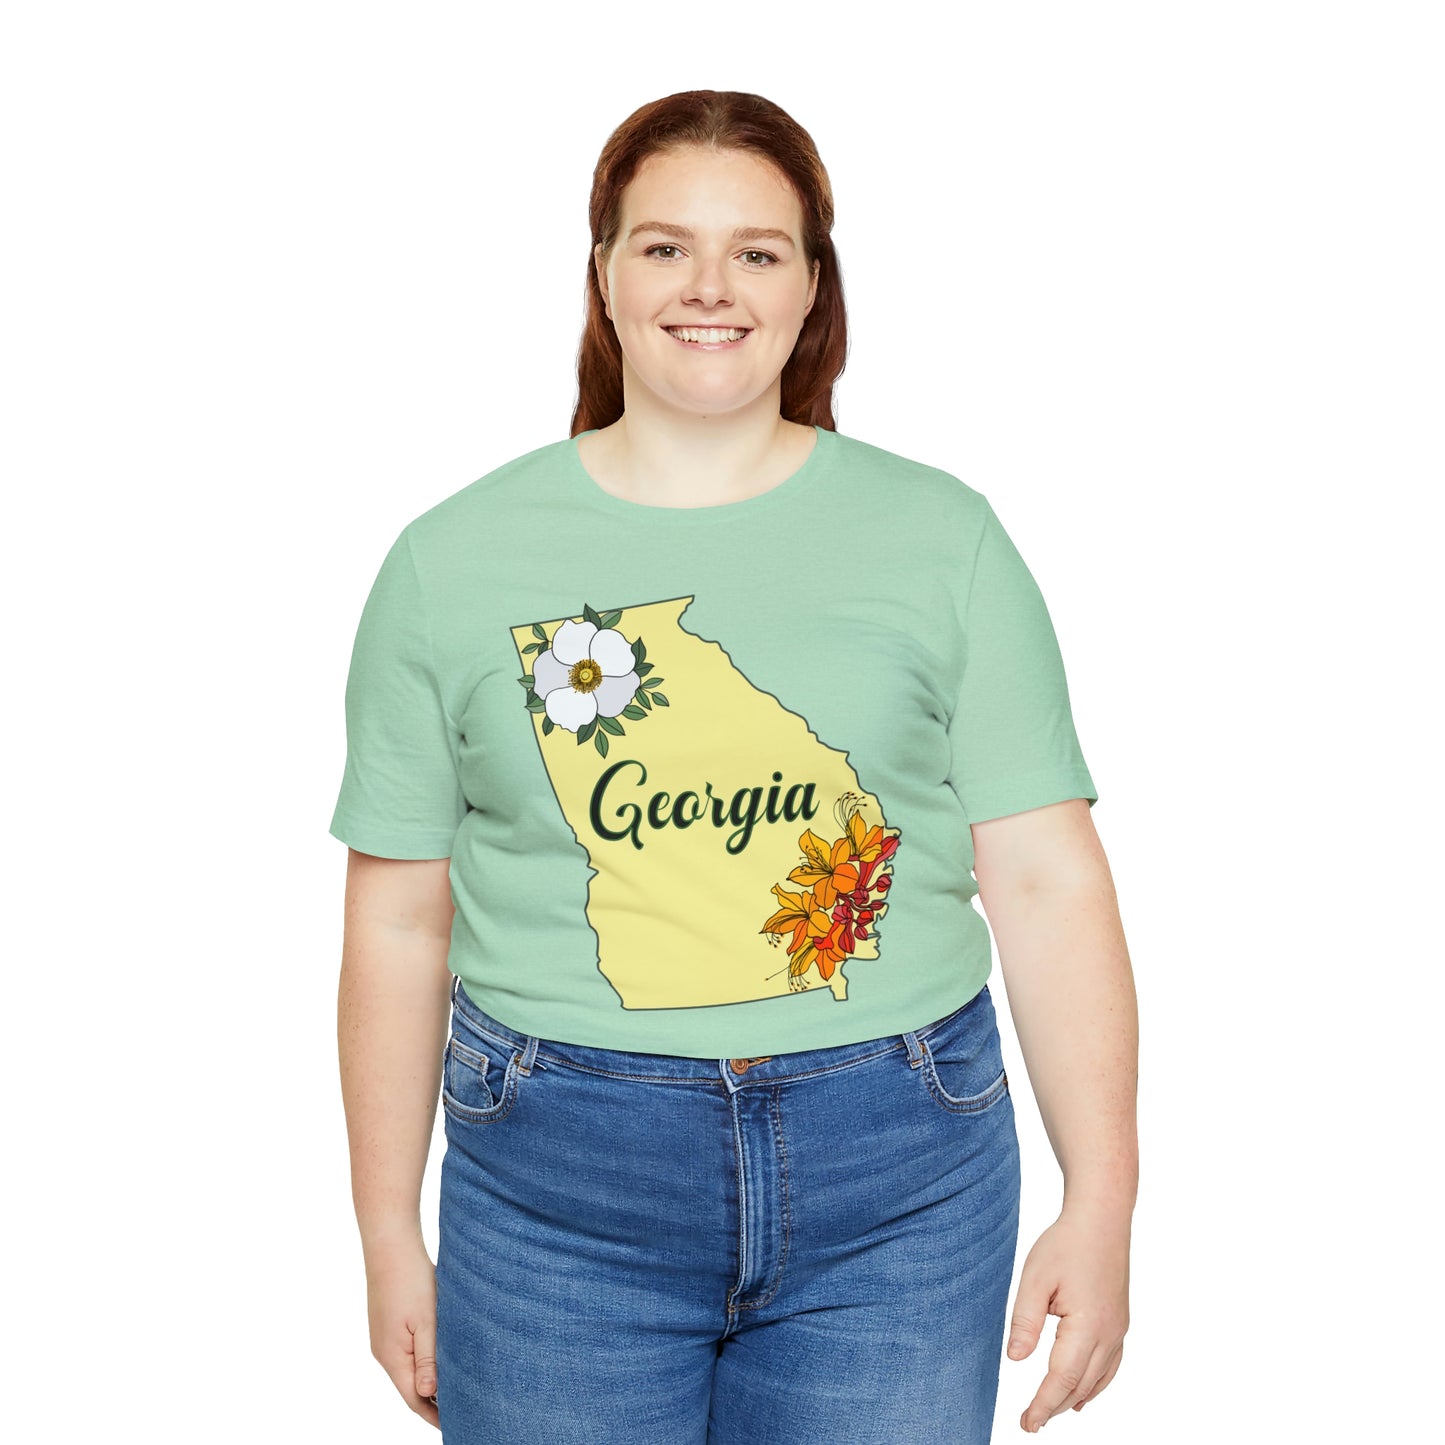 Georgia State Flower Short Sleeve T-shirt